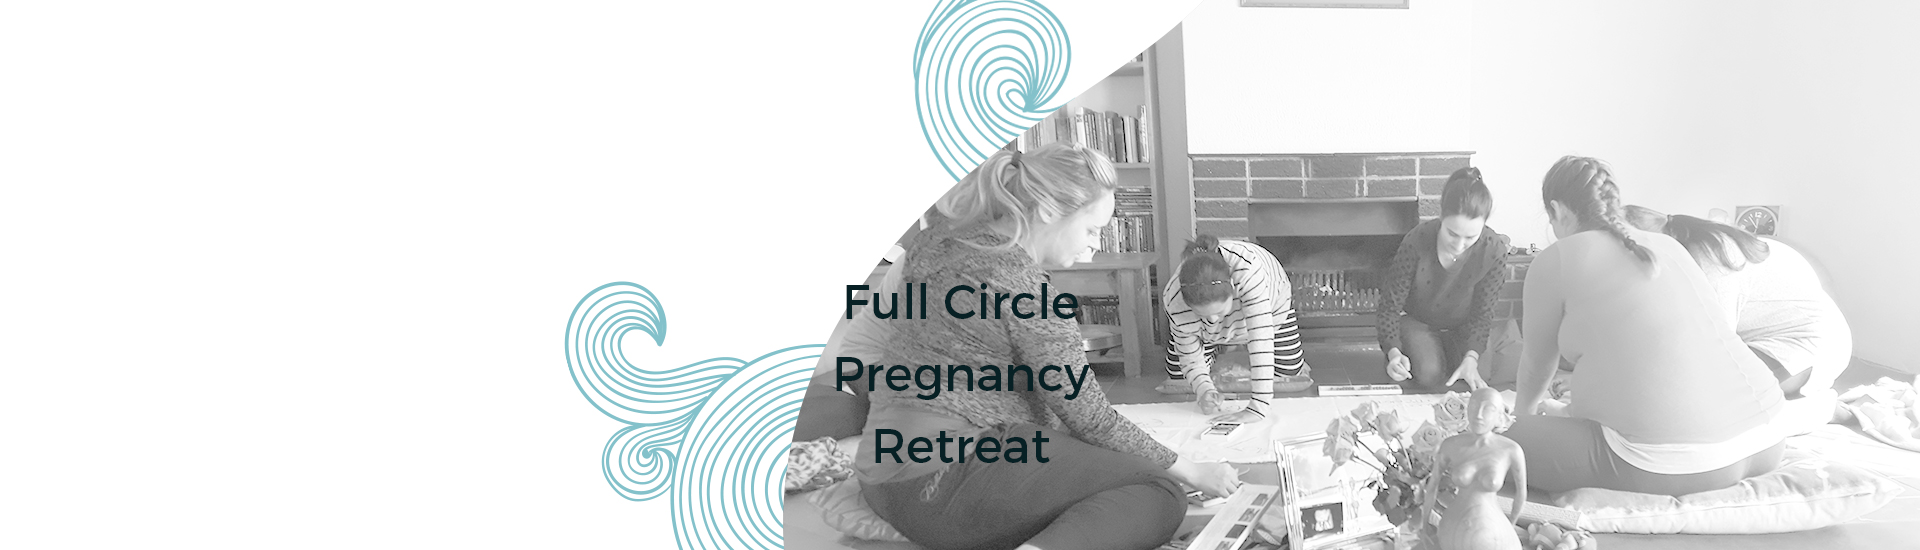 Full Circle Pregnancy Retreat